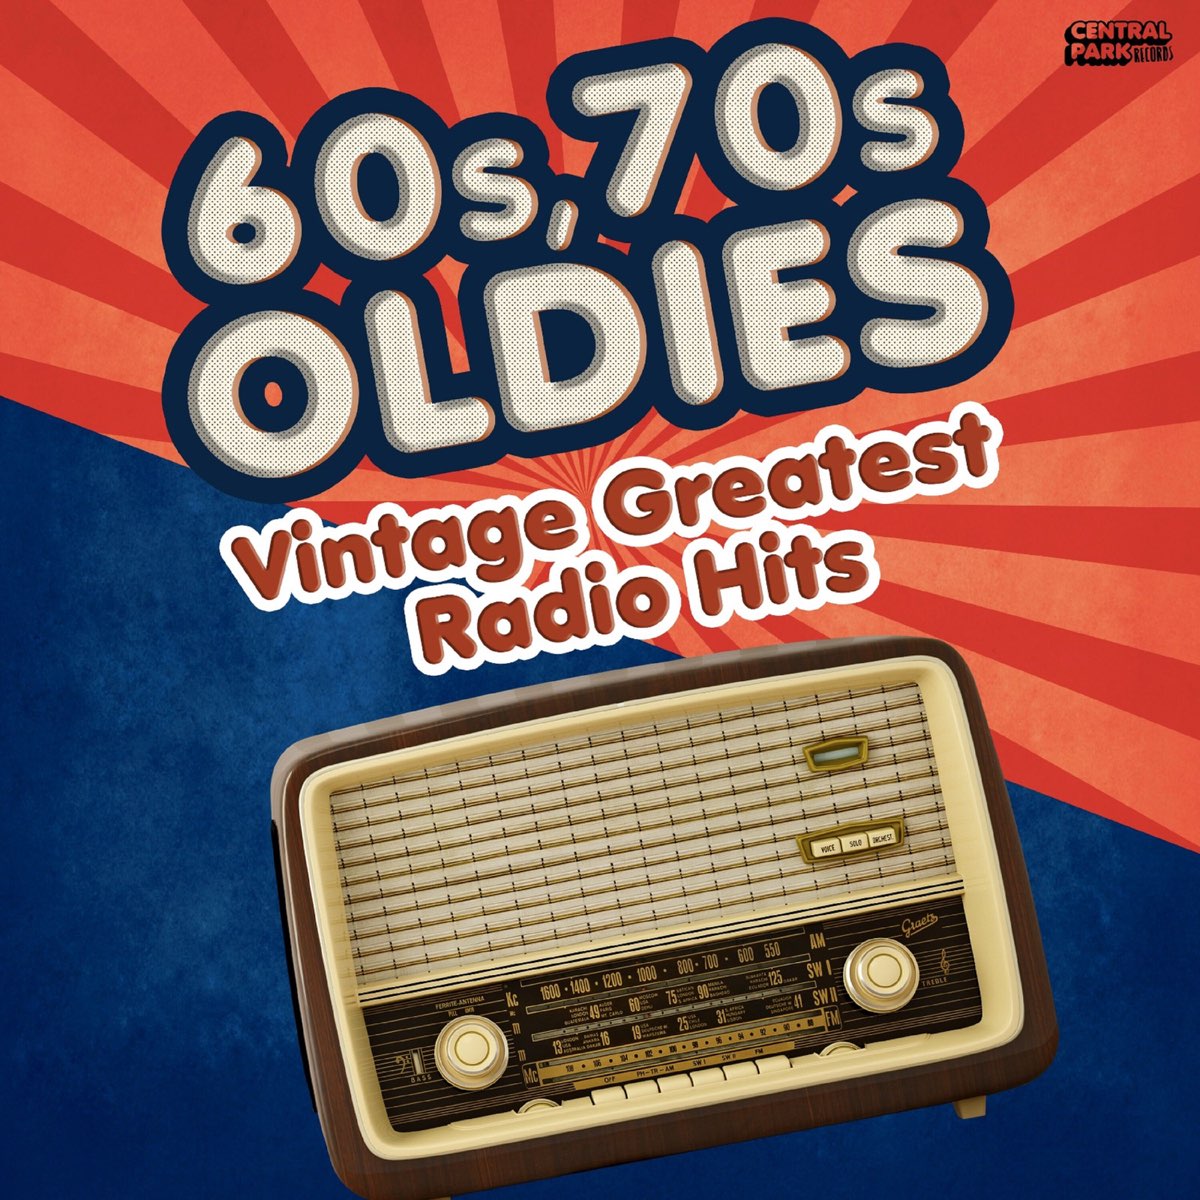 60s, 70s Oldies - Vintage Greatest Radio Hits - Album by Vários Artistas -  Apple Music